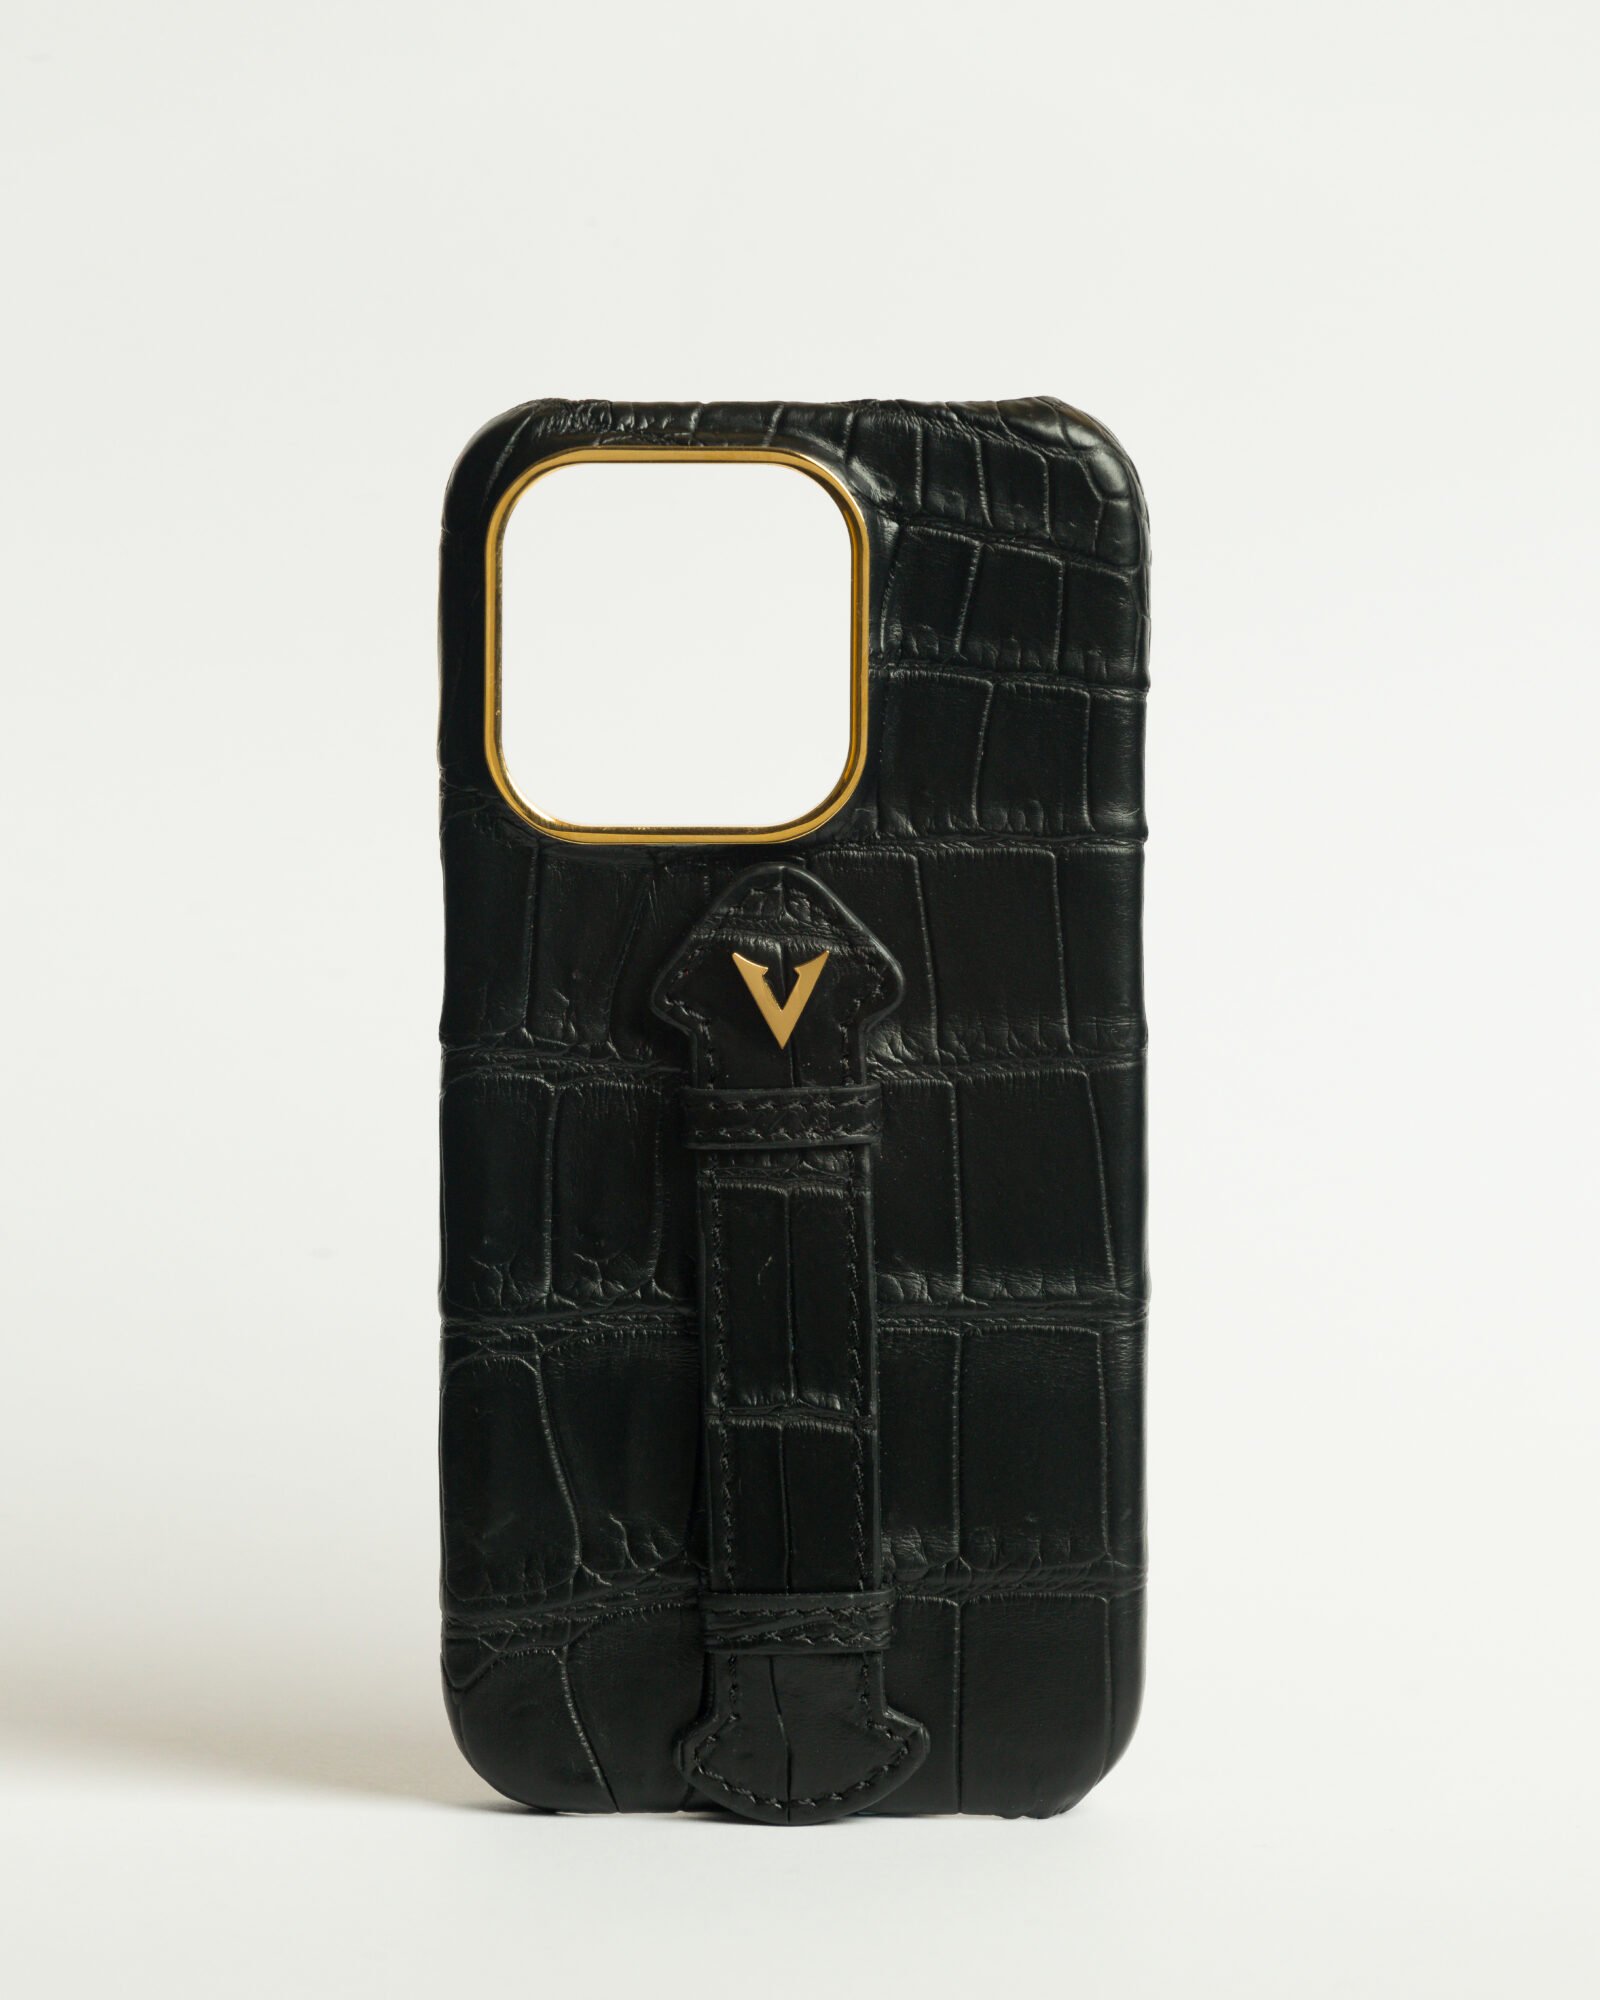 Black Crocodile leather iPhone case